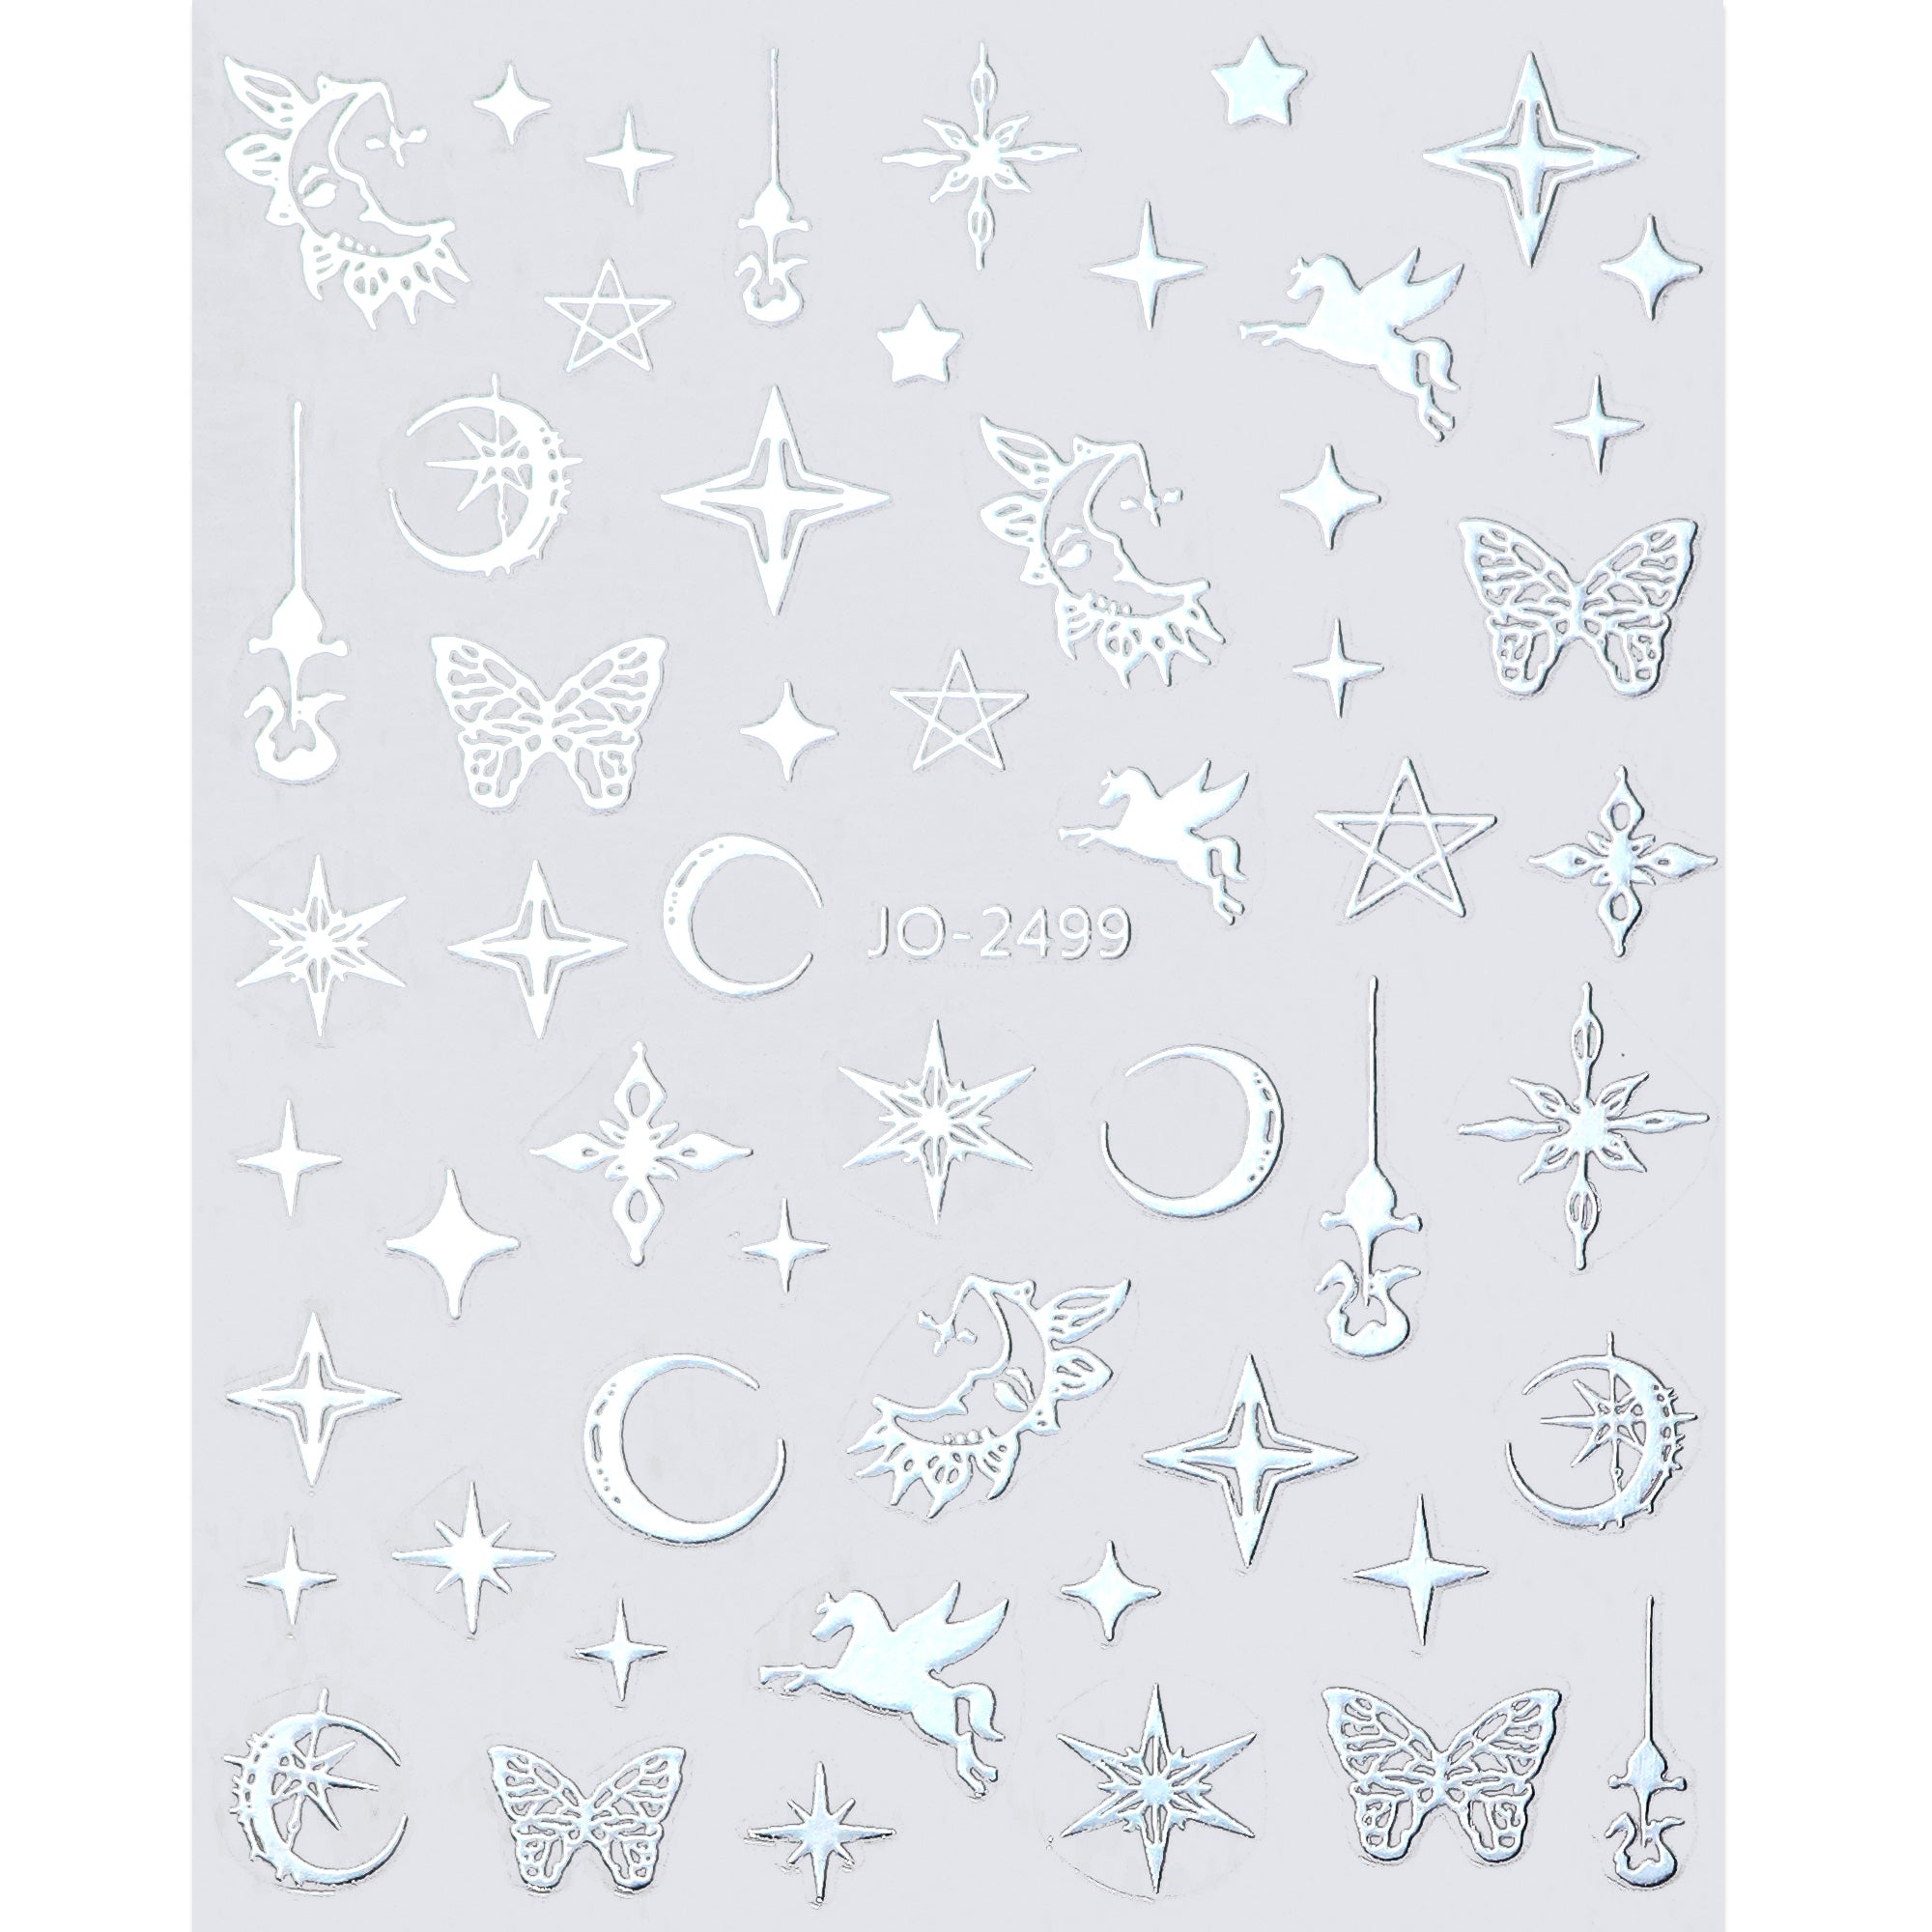 Nail Sticker - Metallic Silver (Sun,Moon, Butterfly)